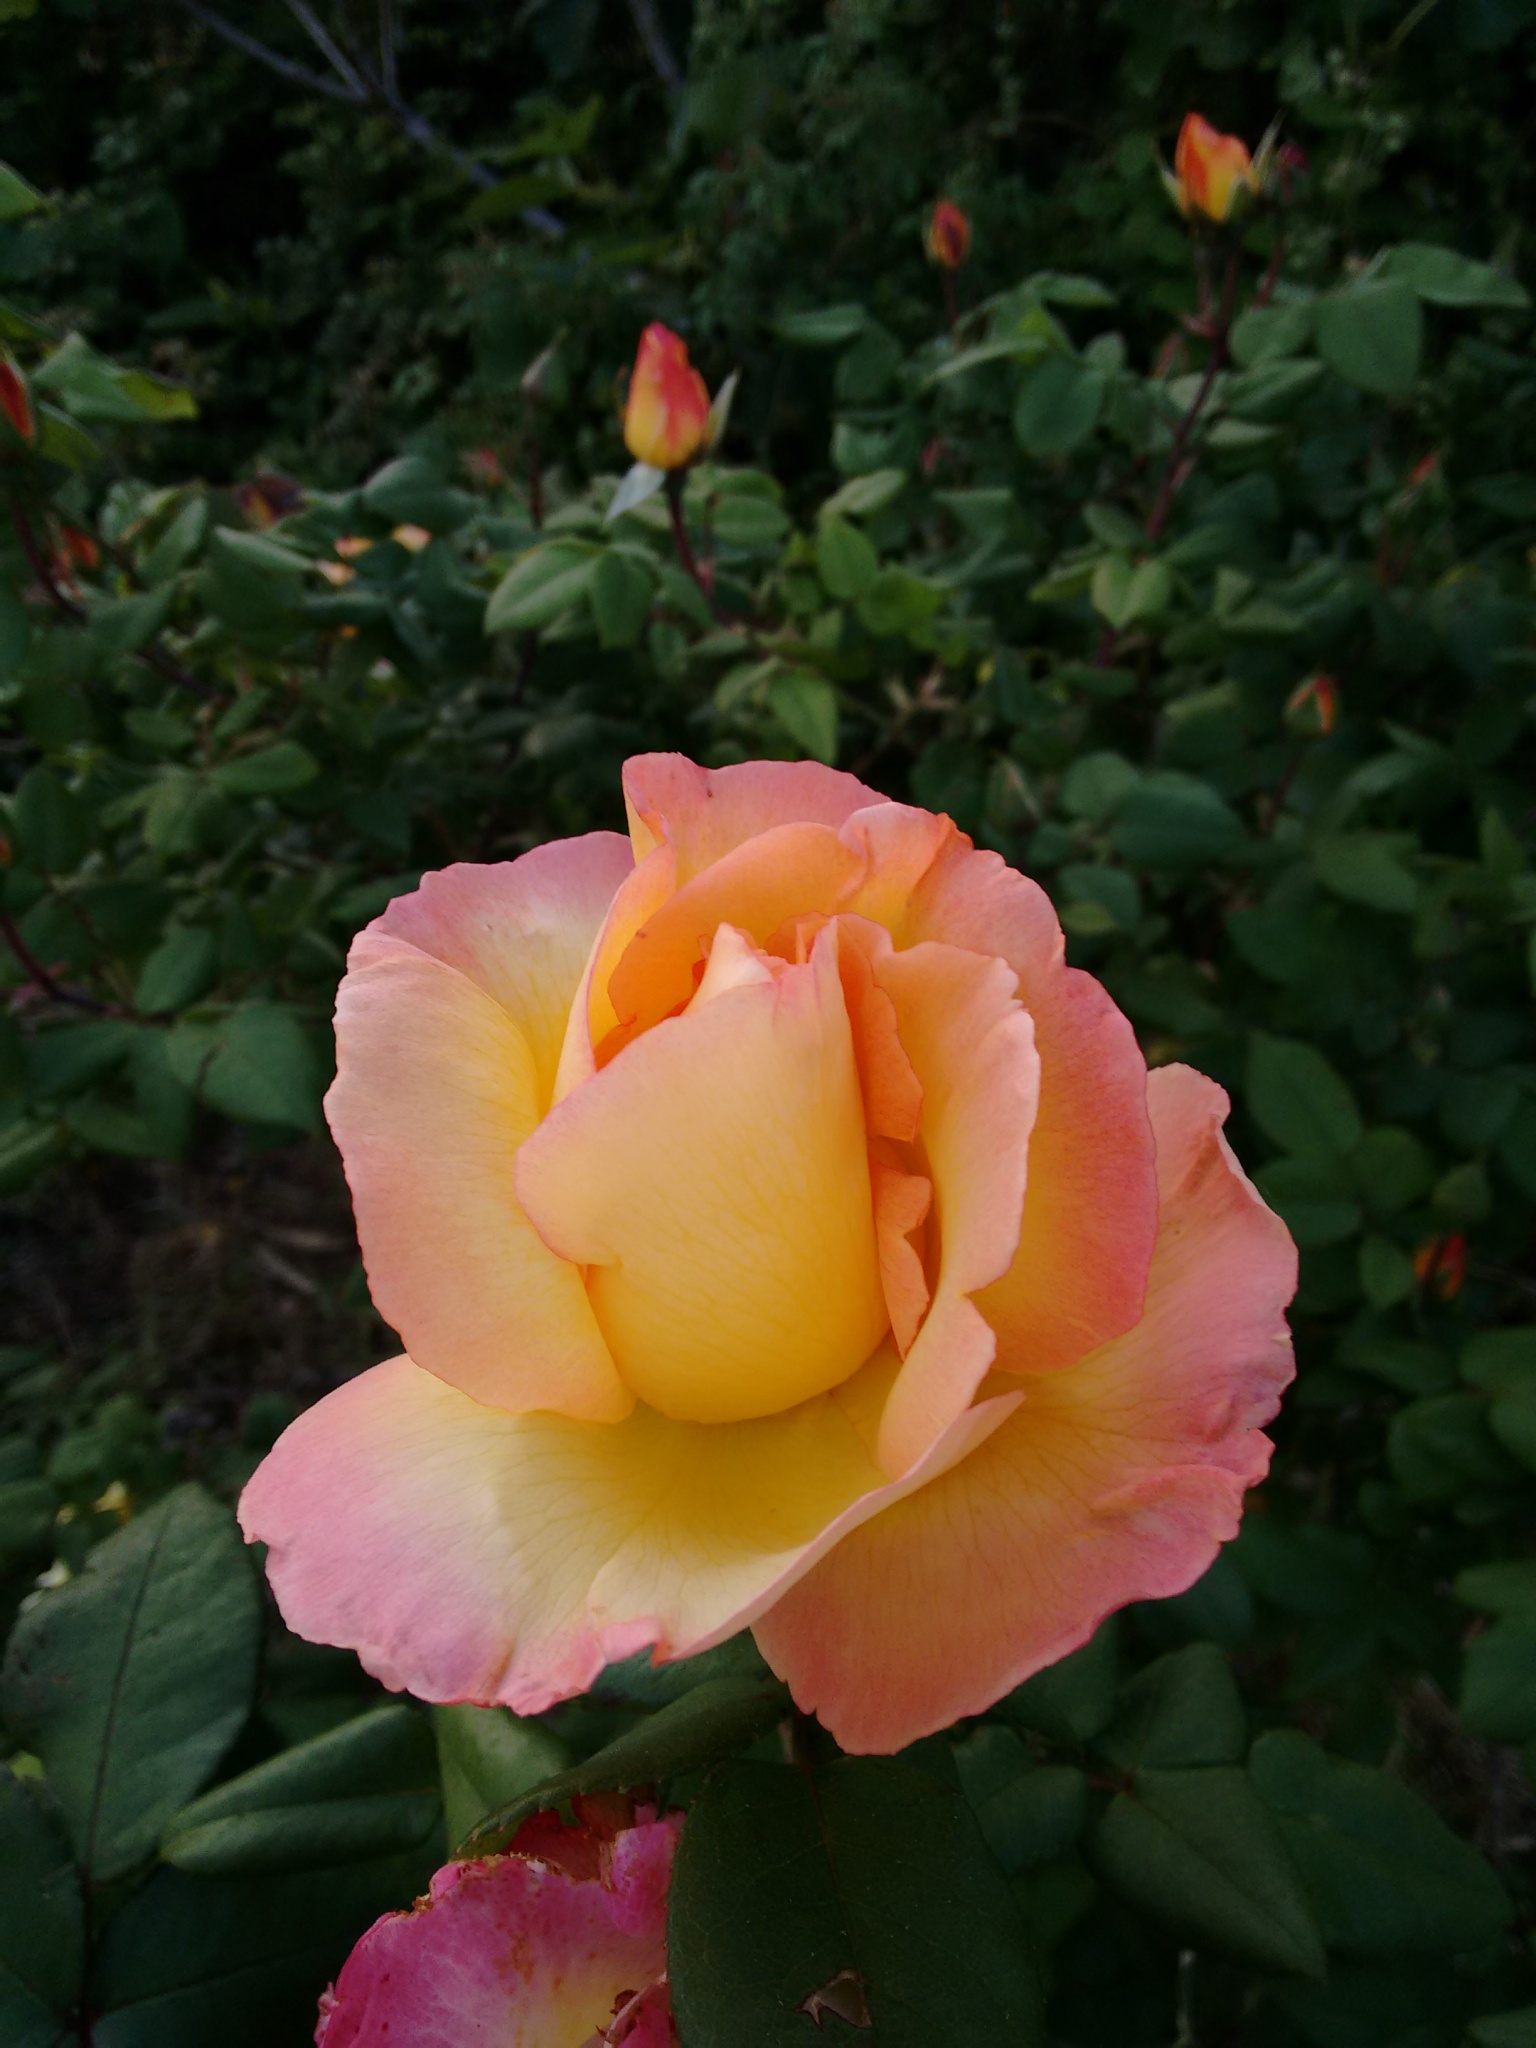 Rosa arancione photo